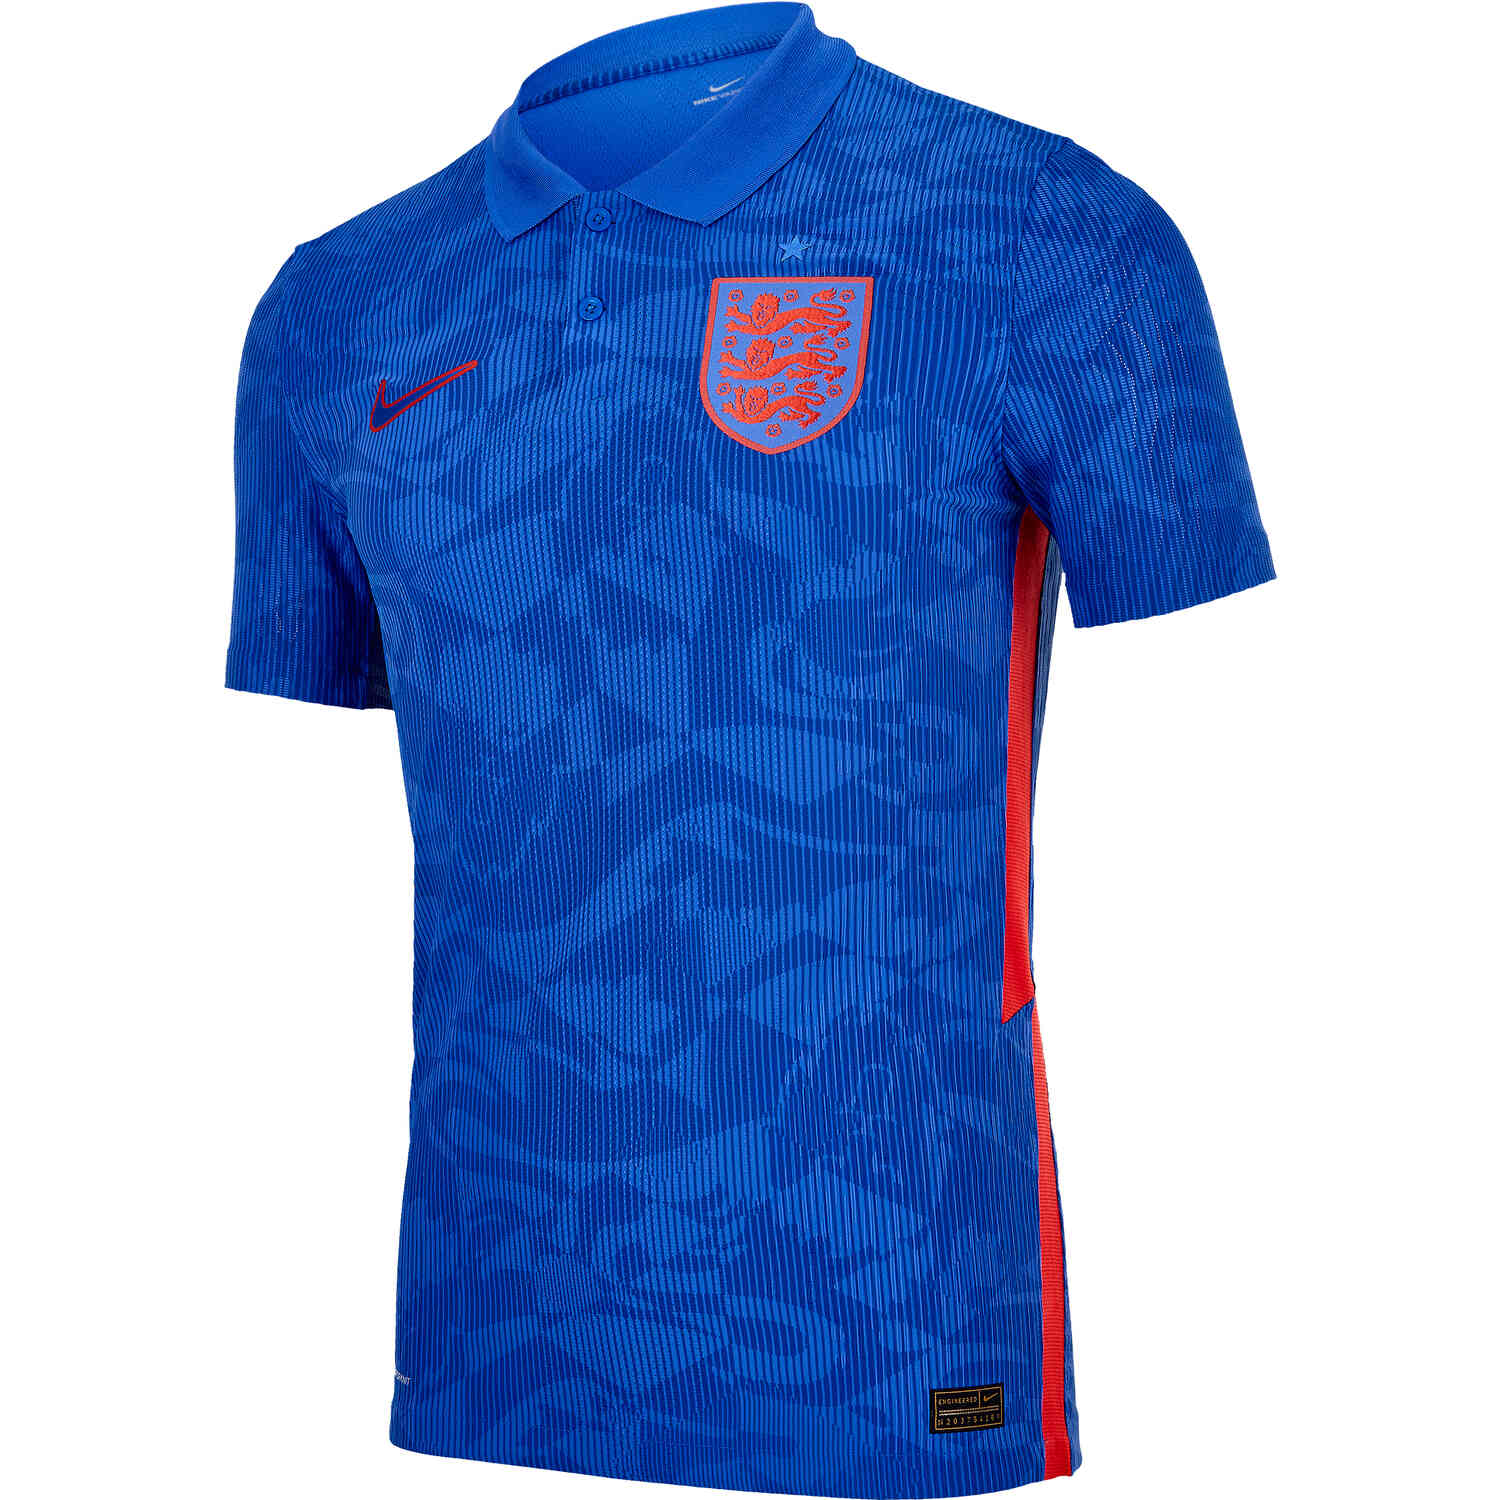 2020 Nike England Away Match Jersey - SoccerPro